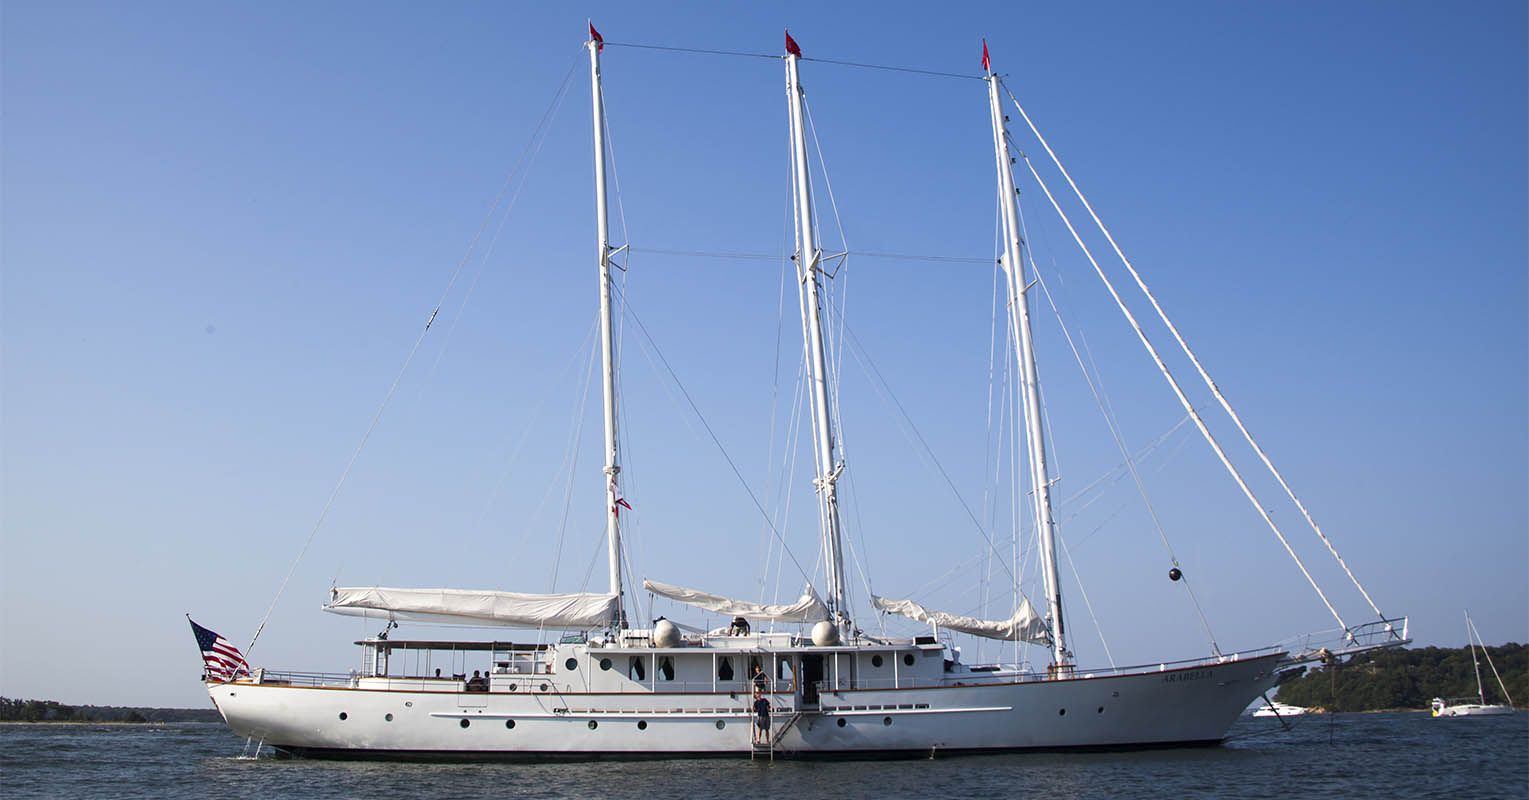 sailing yacht arabella